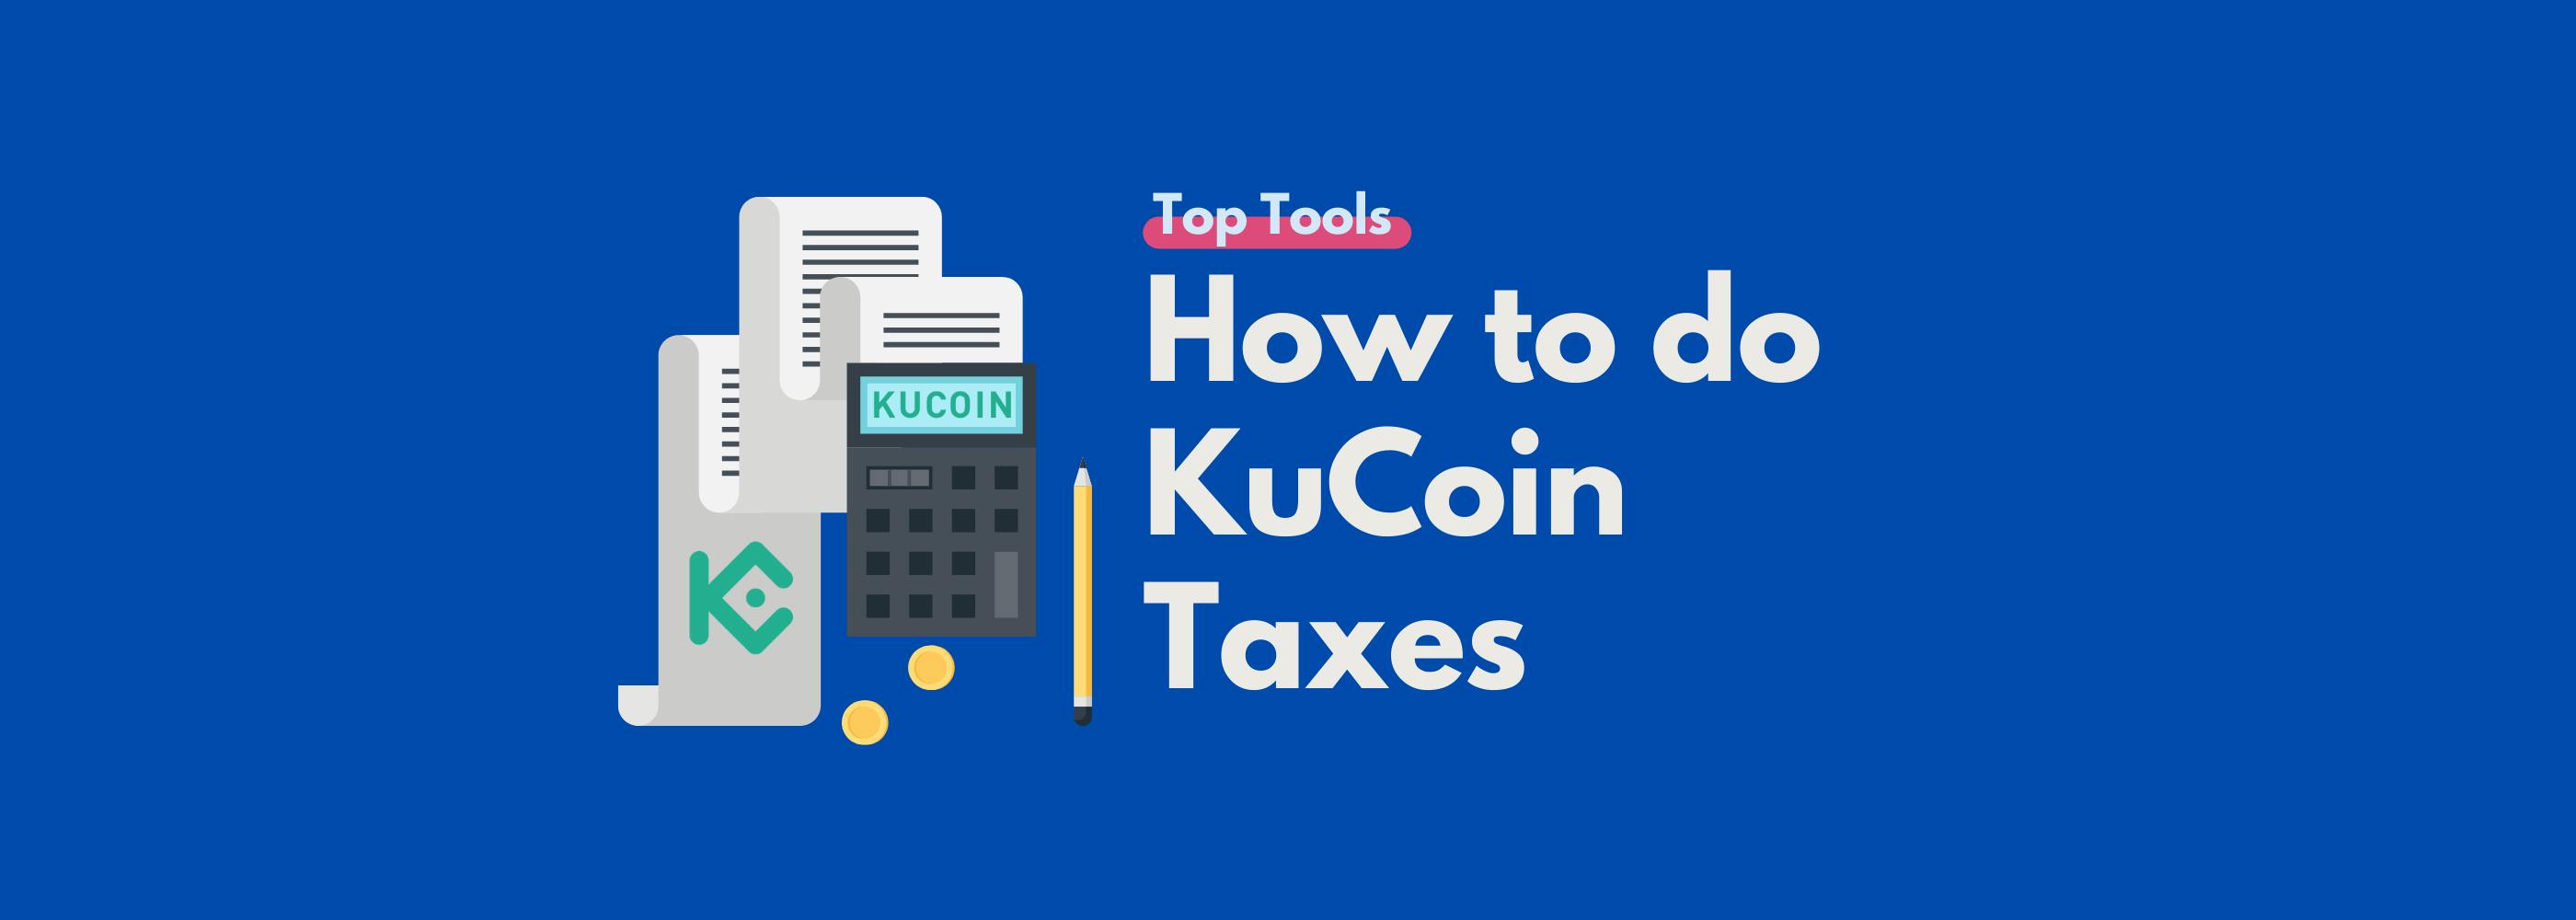 KuCoin taxes guide